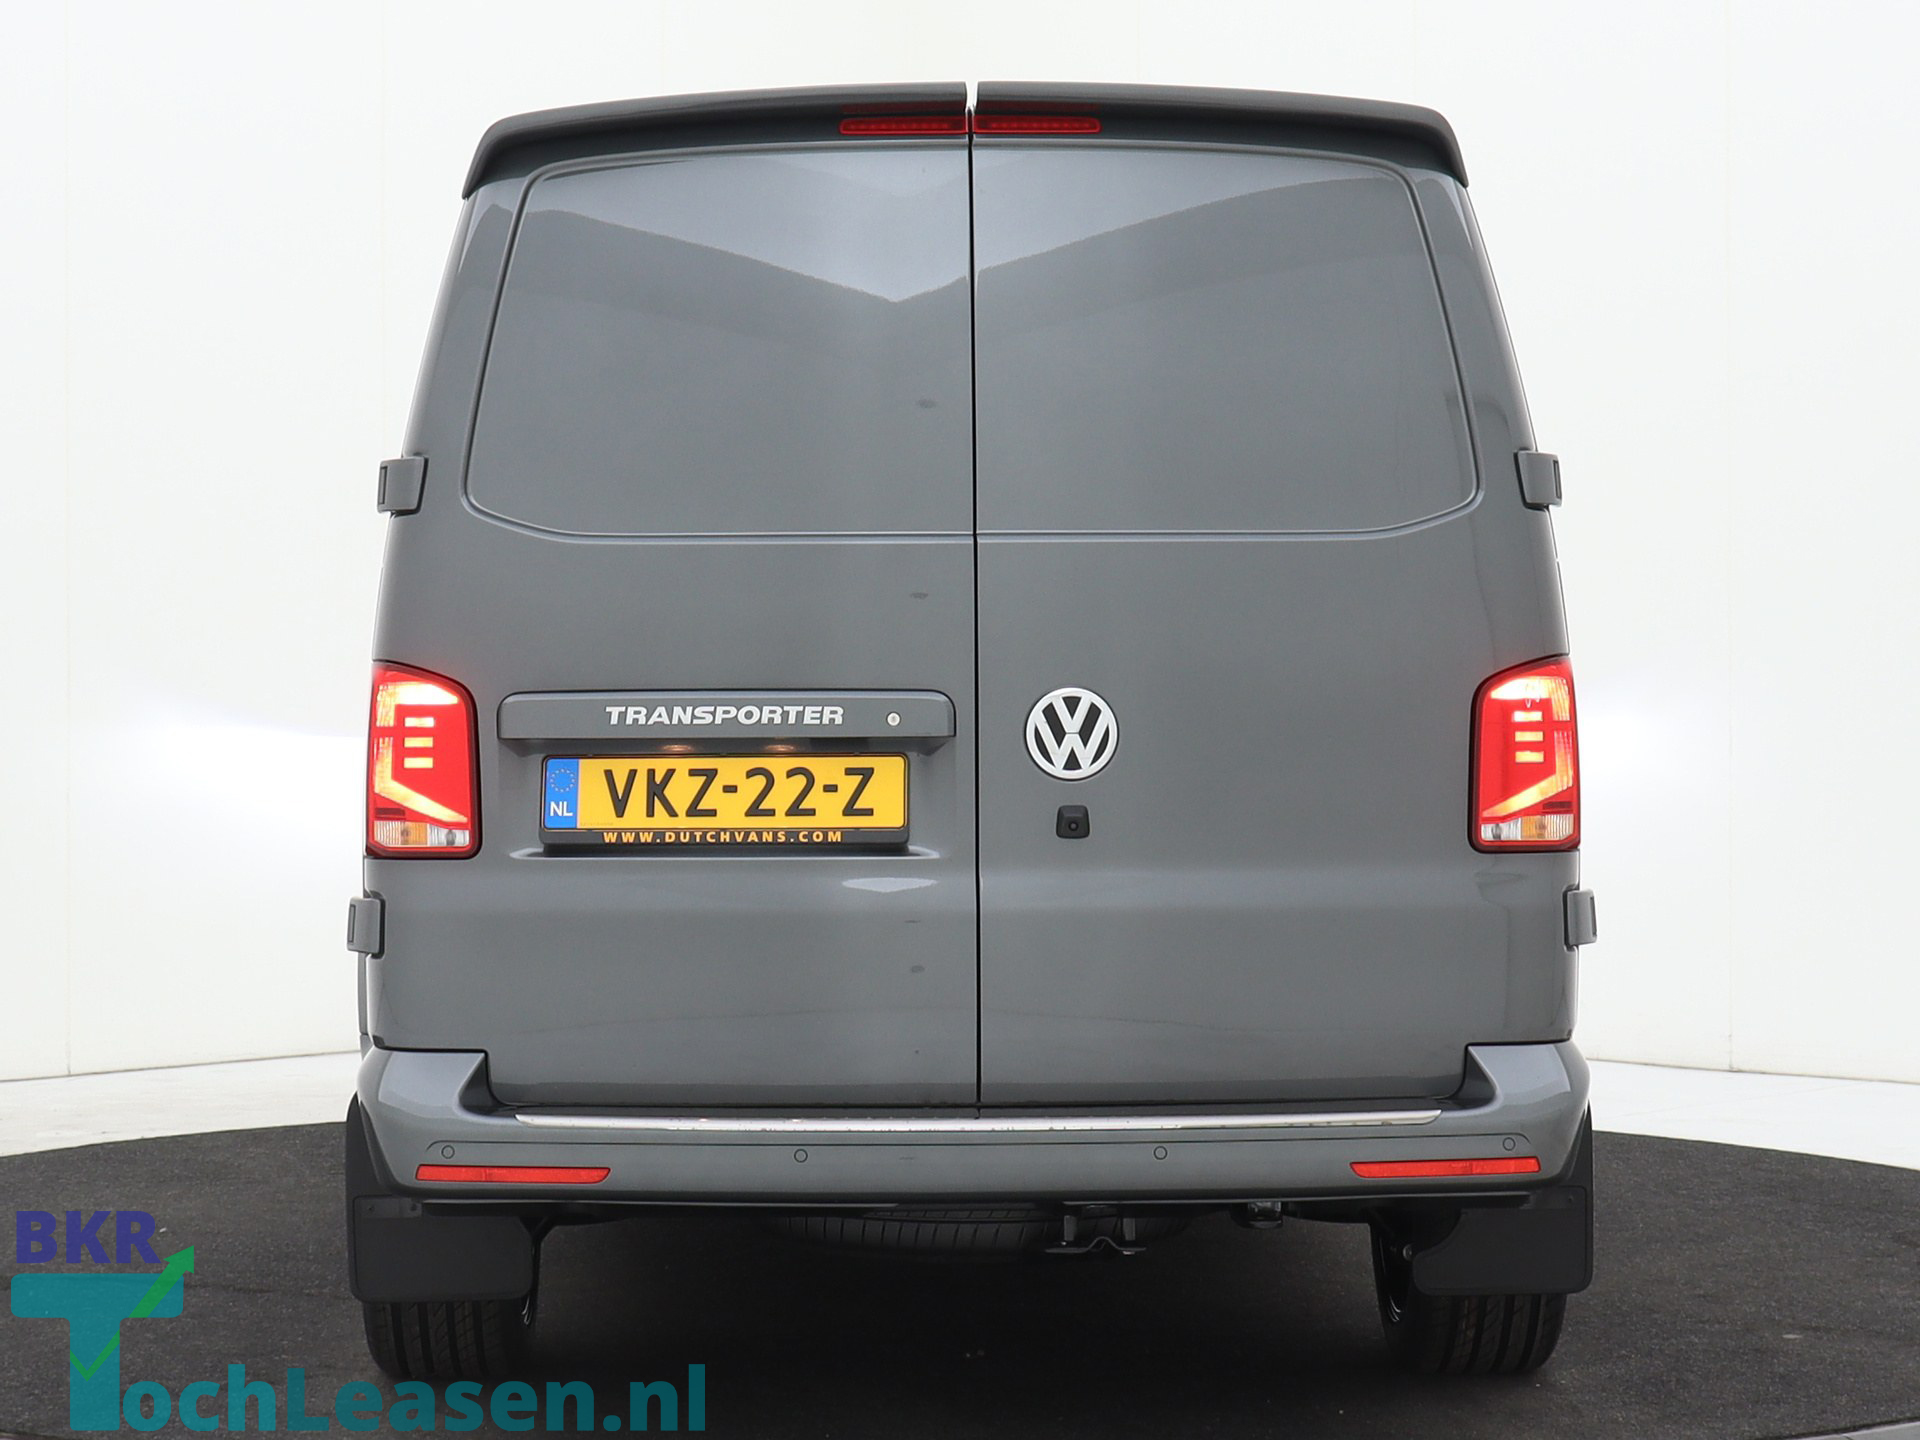 BKR toch leasen - Volkswagen Transporter - Grijs 3